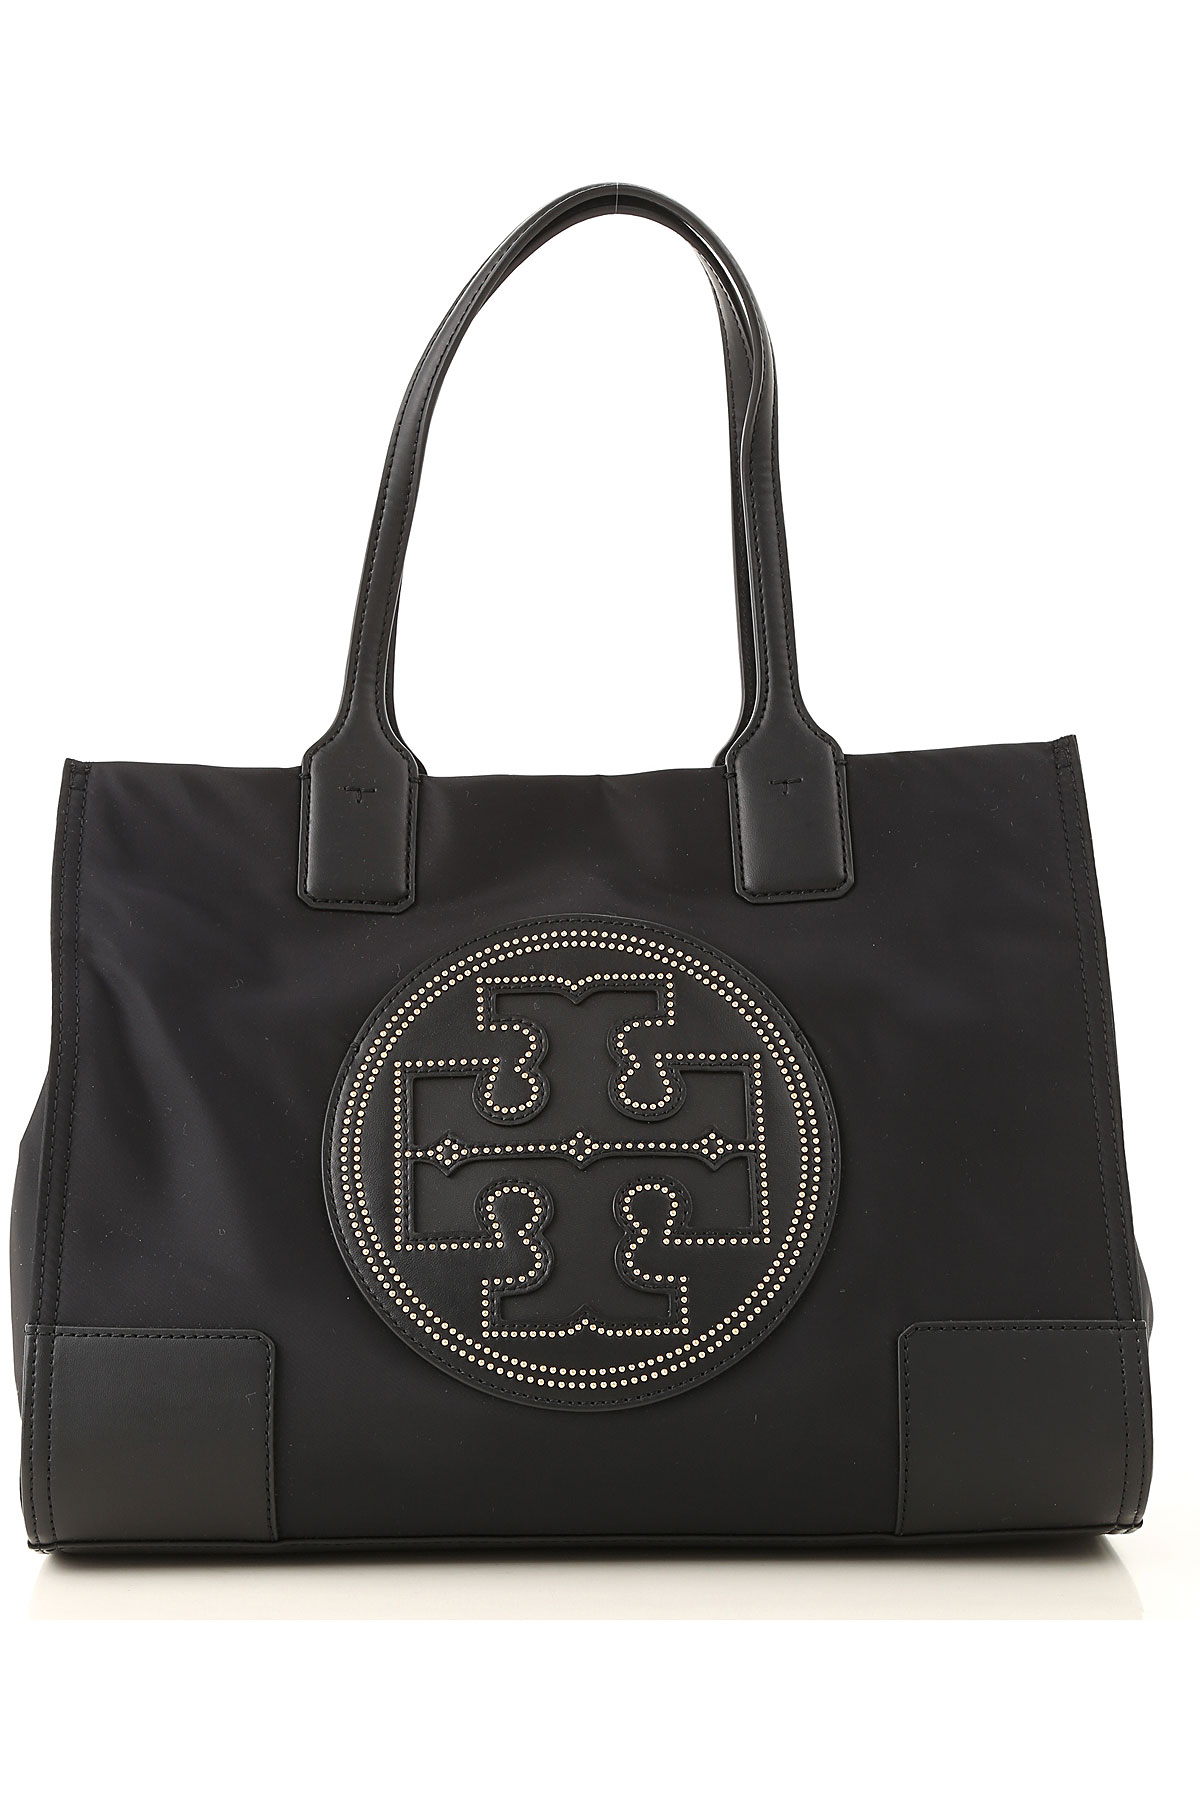 Handbags Tory Burch, Style code: 52293-001-